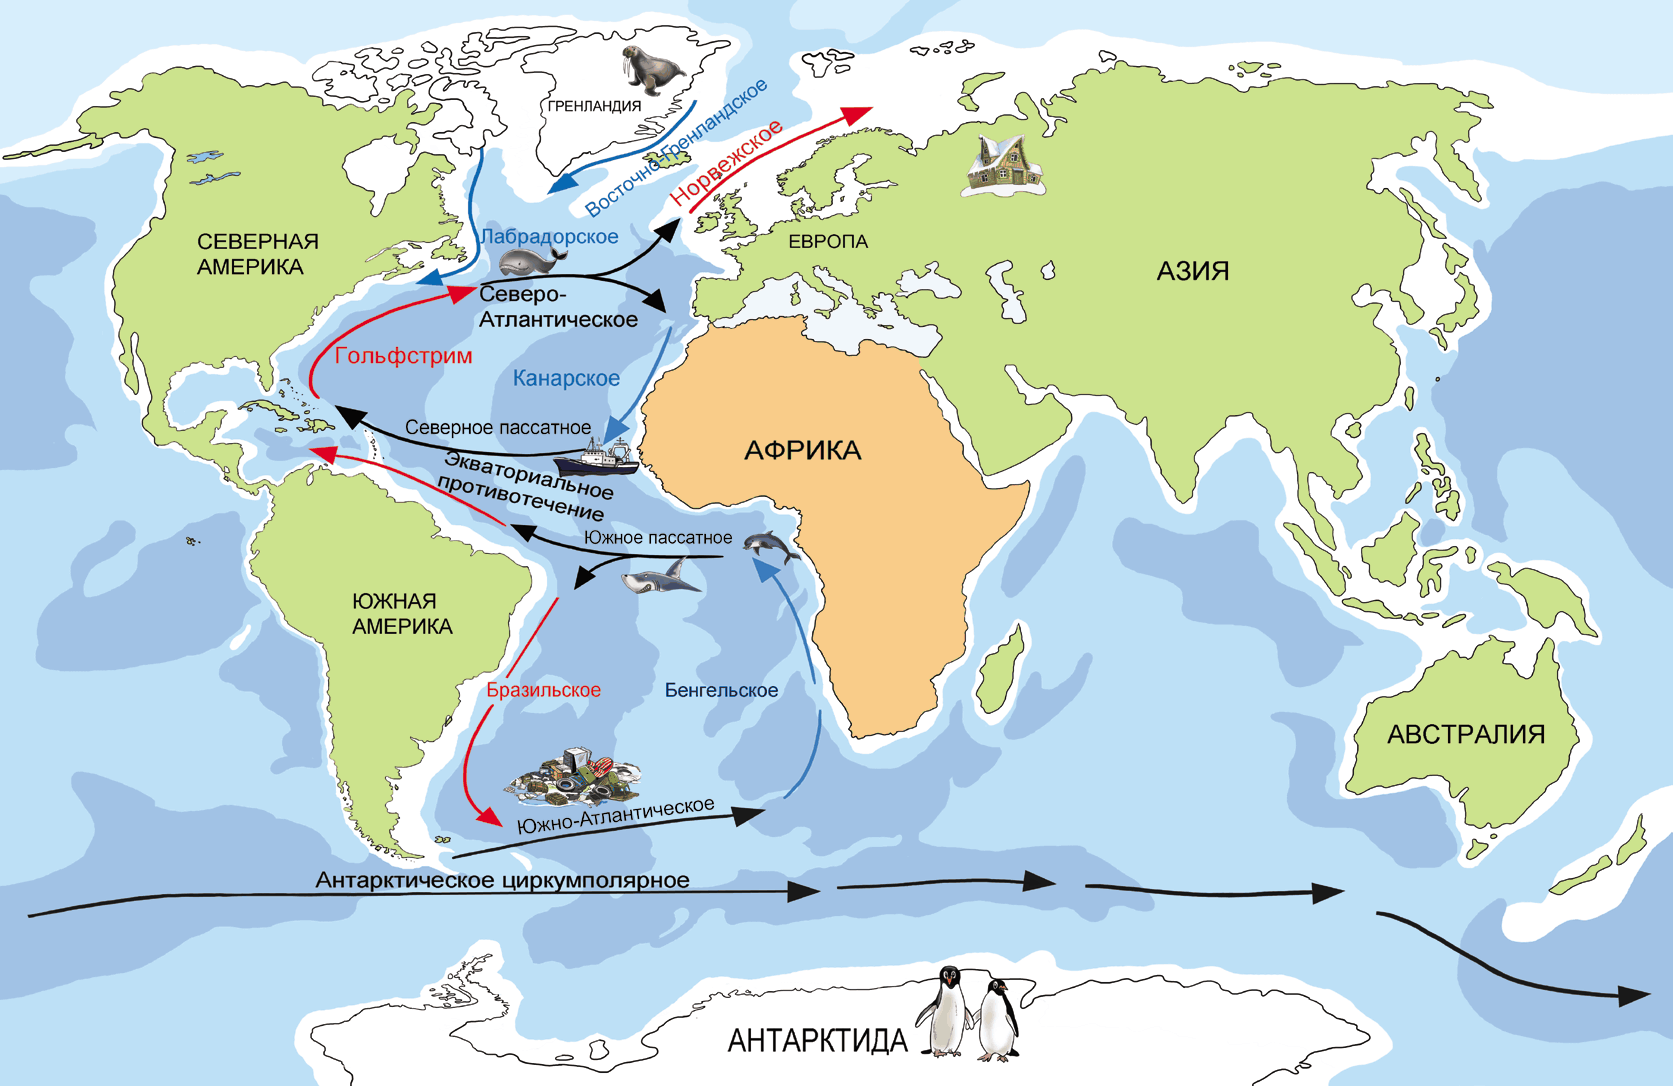 Назовите теплые течения атлантического океана. Гольфстрим на карте Атлантического океана. Северо-атлантическое течение на карте. Гольфстрим в Атлантическом океане. Карта течений Атлантического океана.